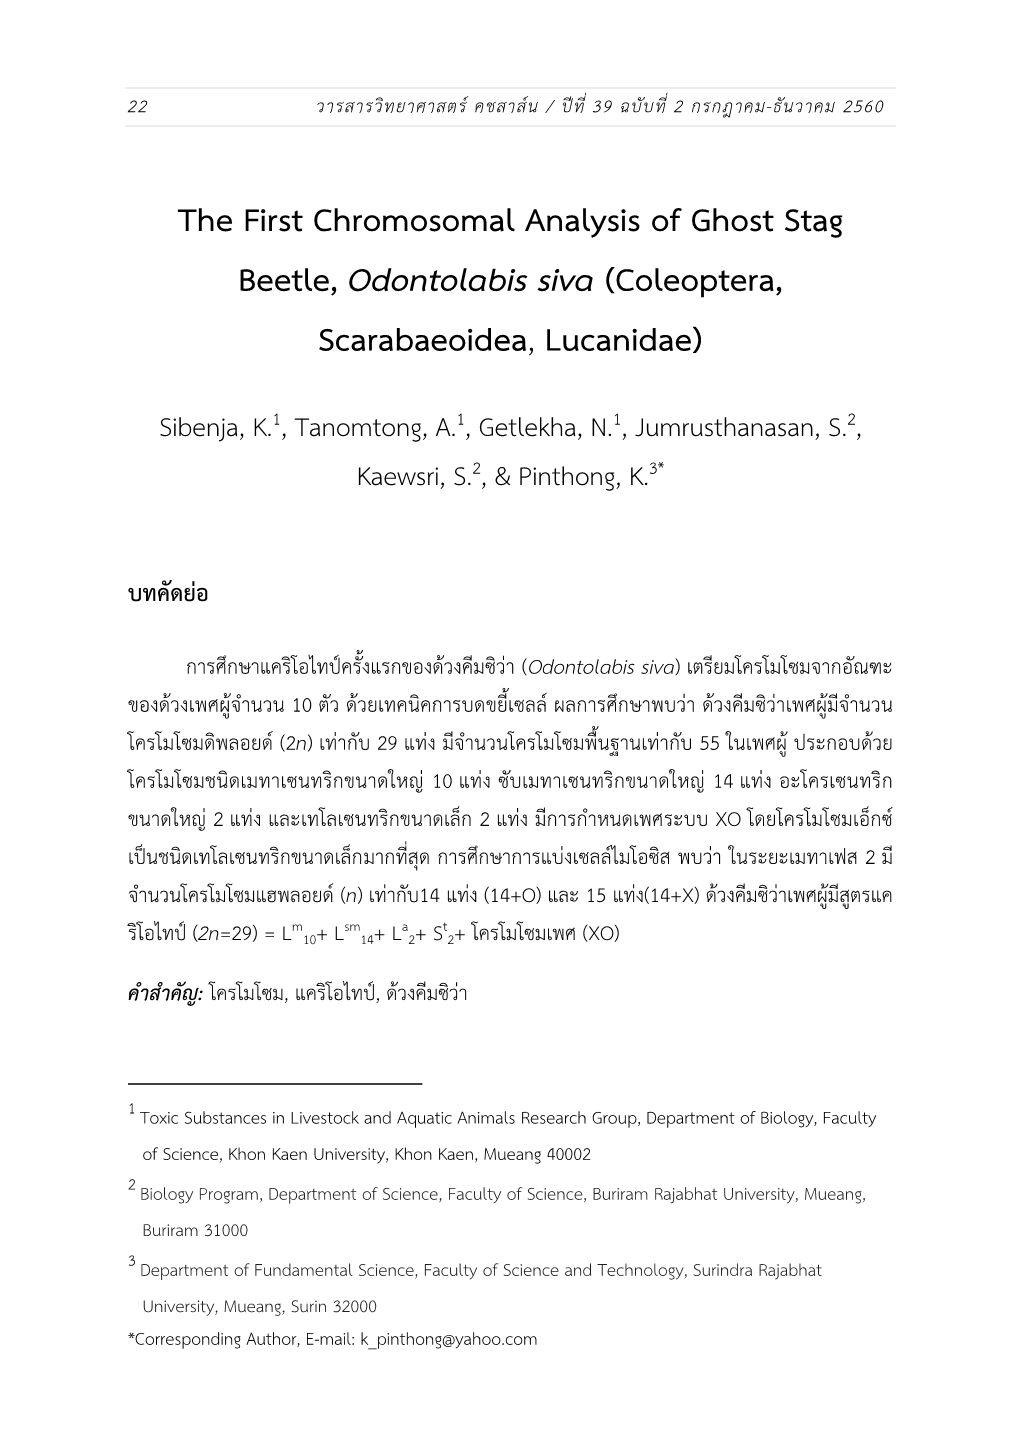 The First Chromosomal Analysis of Ghost Stag Beetle, Odontolabis Siva (Coleoptera, Scarabaeoidea, Lucanidae)